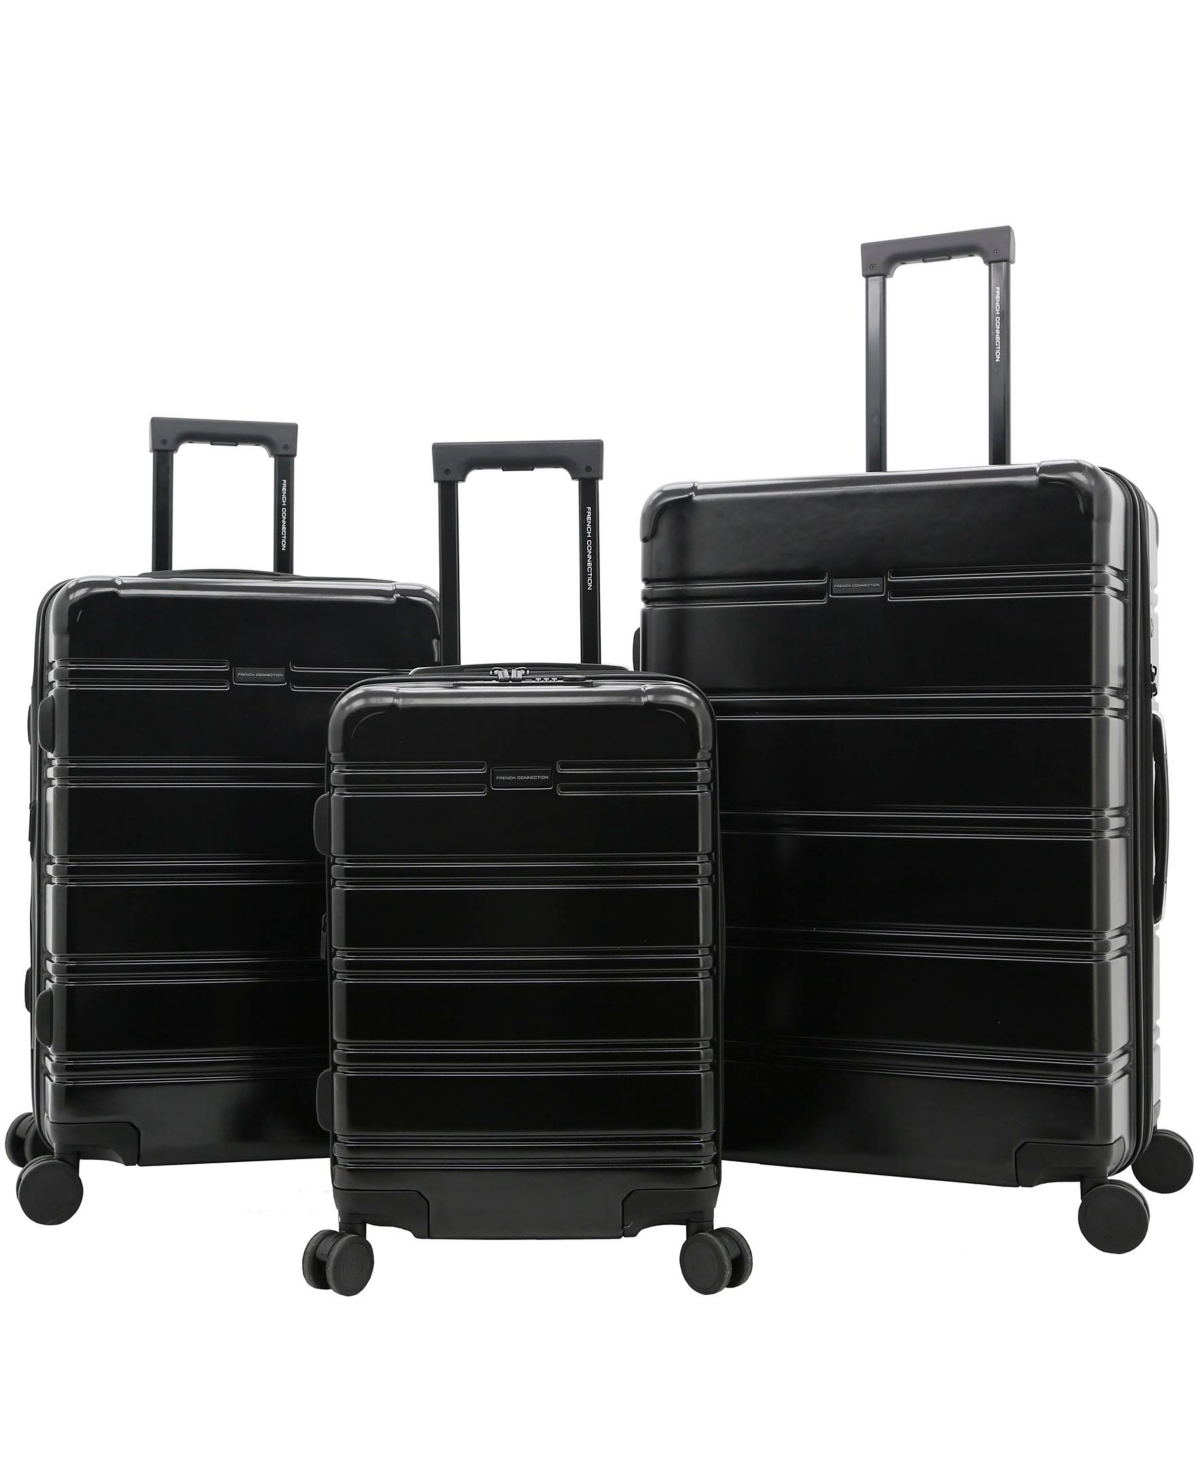 Conrad Expandable Rolling Hardside Luggage Set, 3 Piece - Green